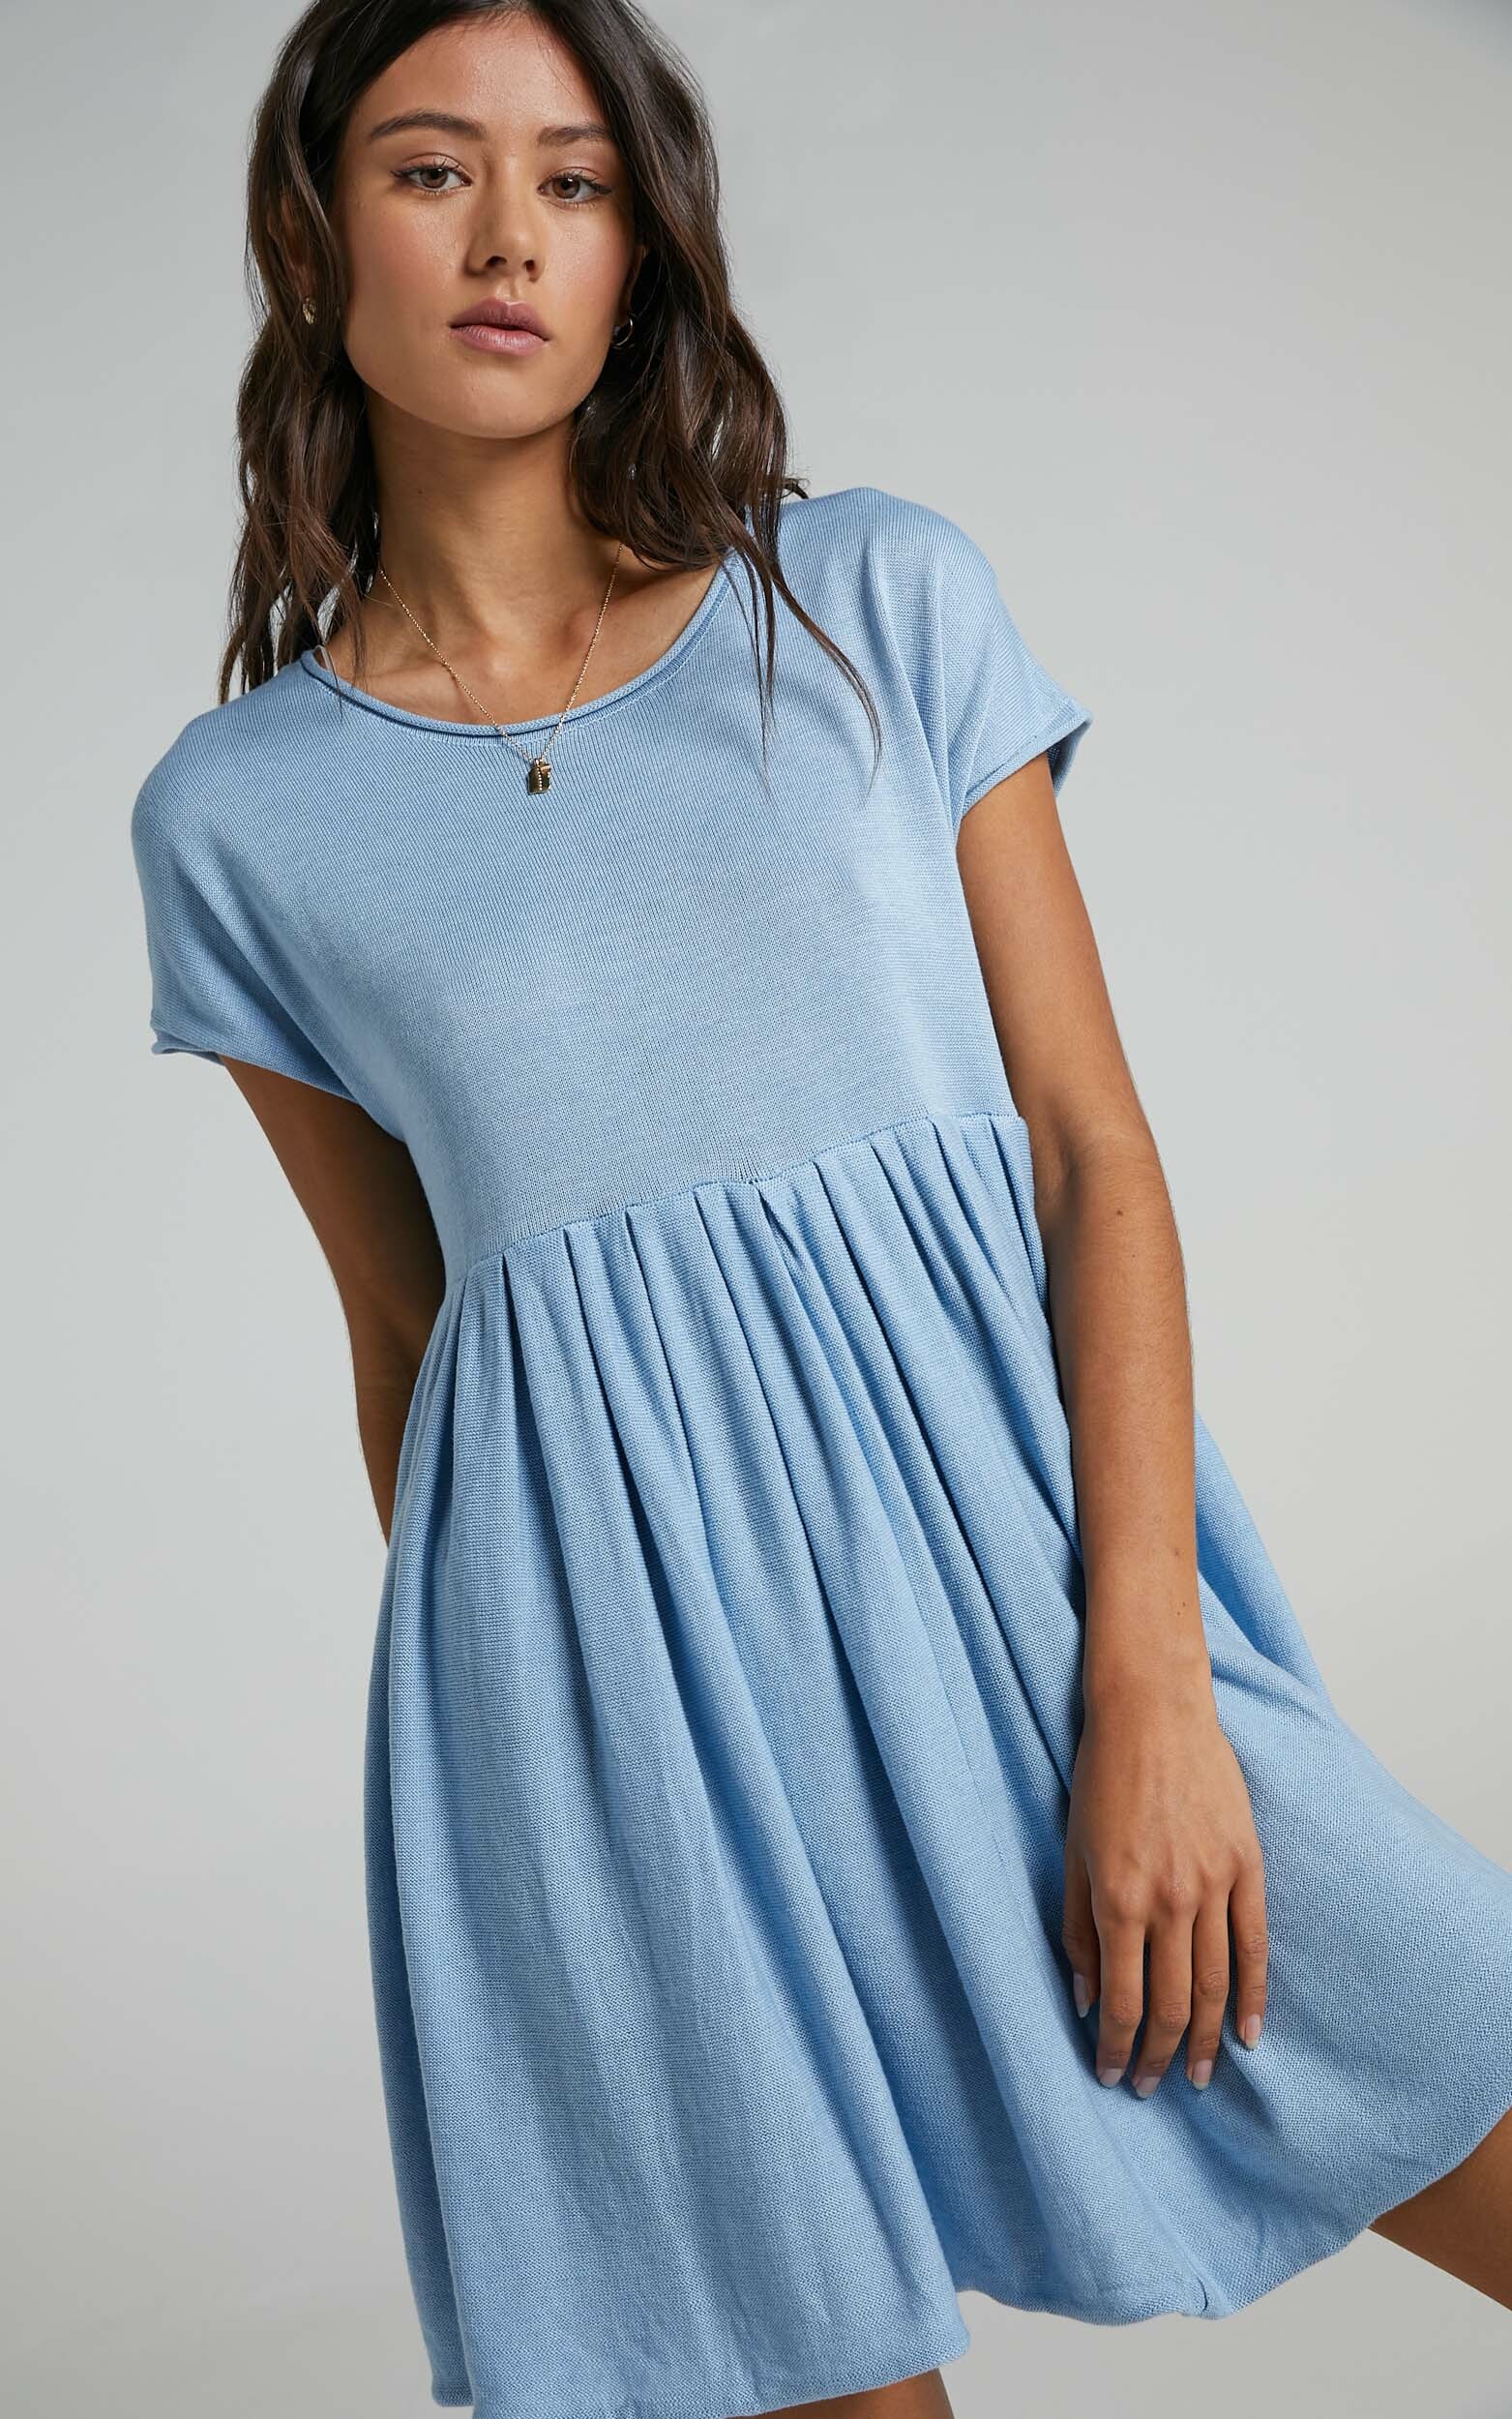 Embry Knit Dress in Powder Blue - 06, BLU1, hi-res image number null